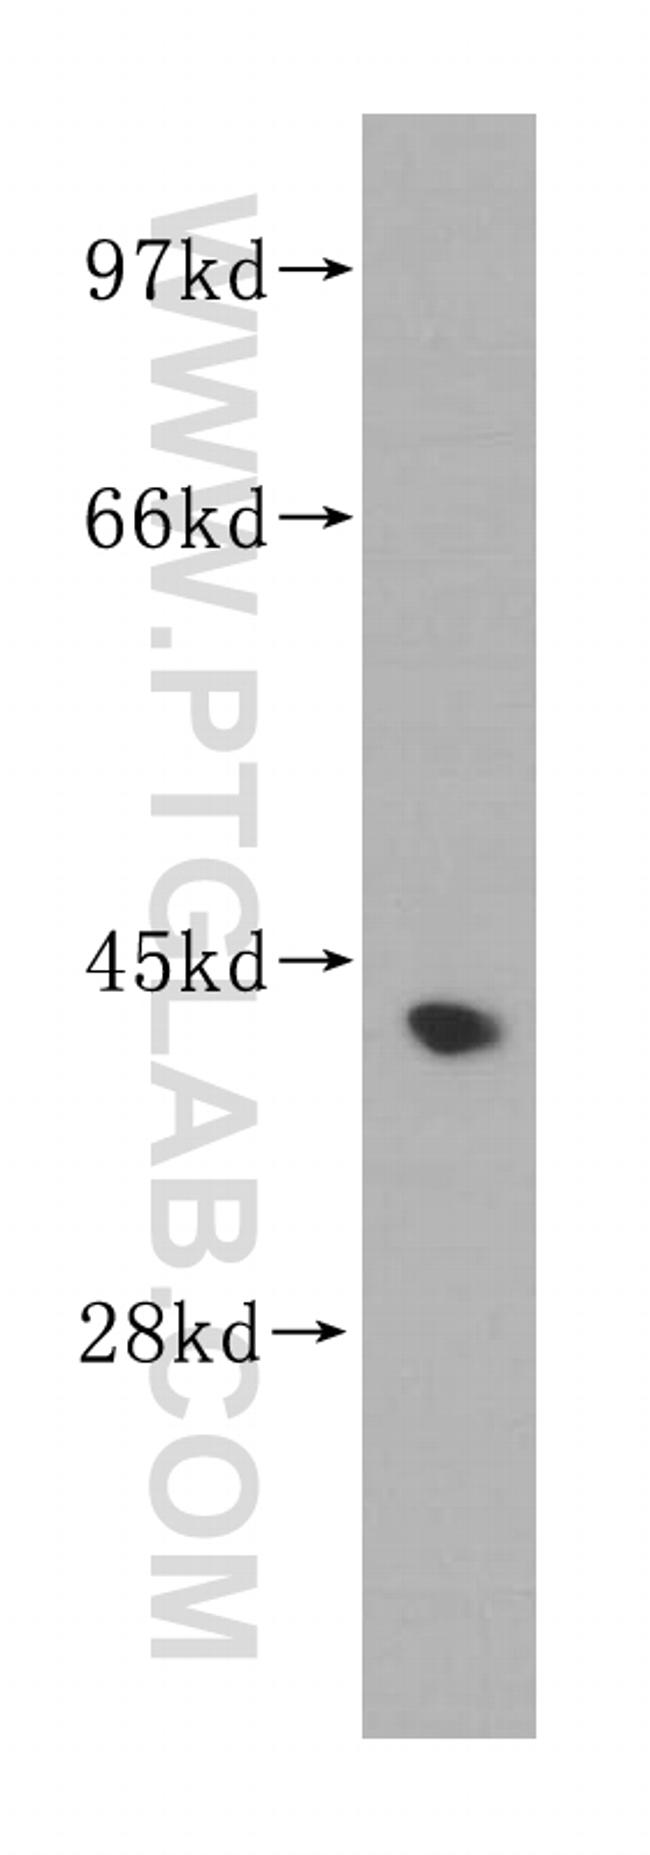 DHODH Antibody in Western Blot (WB)